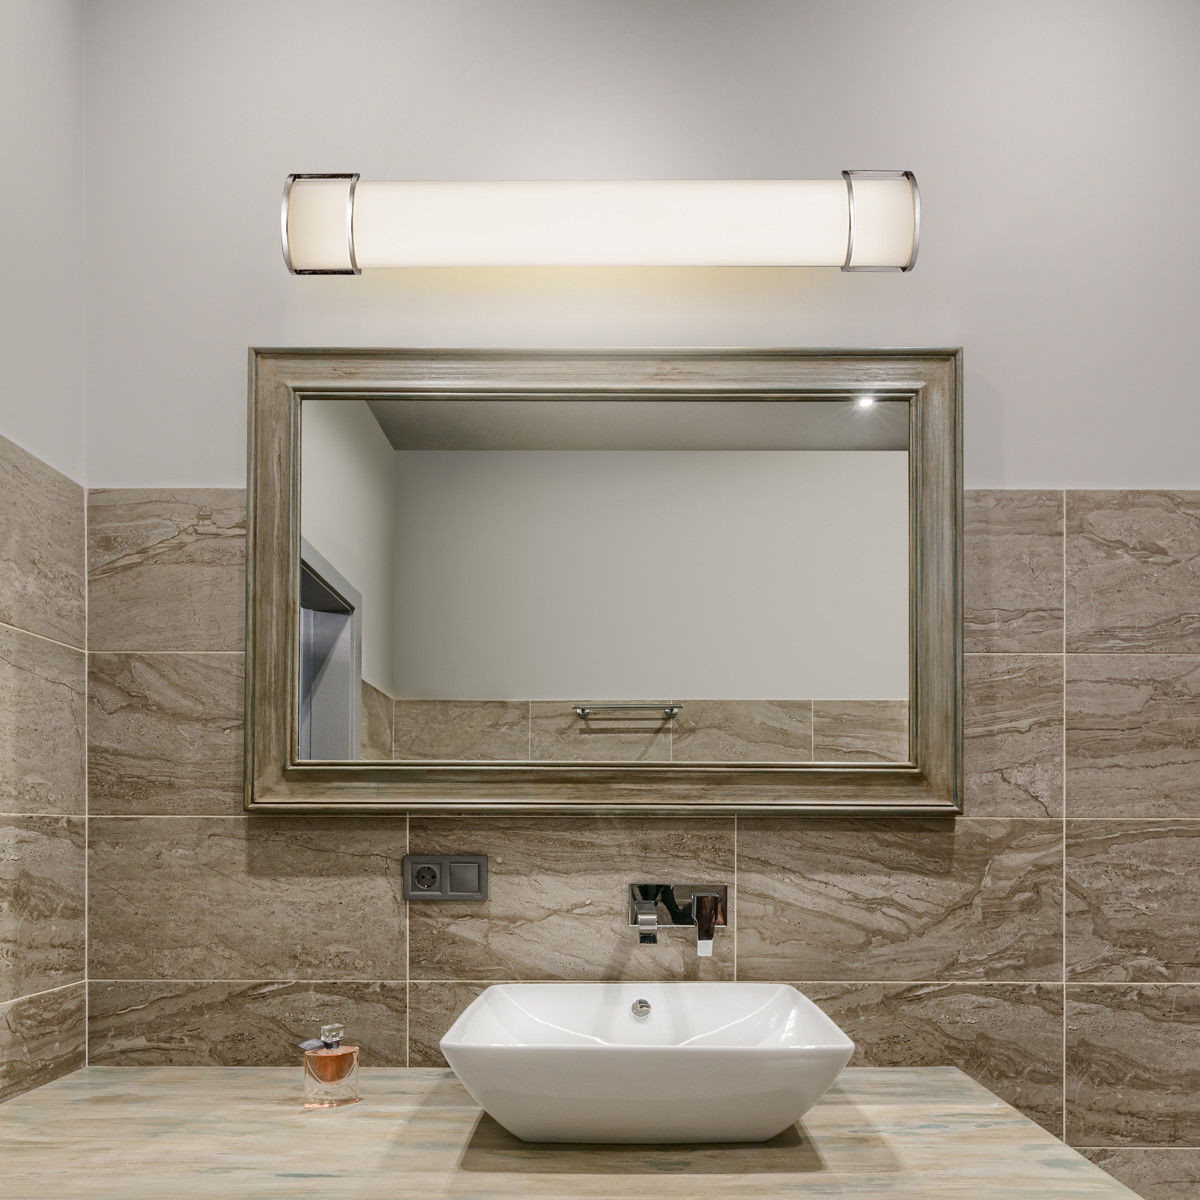 Led Bathroom Light Bars
 Costway 36 25W Integrated LED Linear Vanity Light Bar